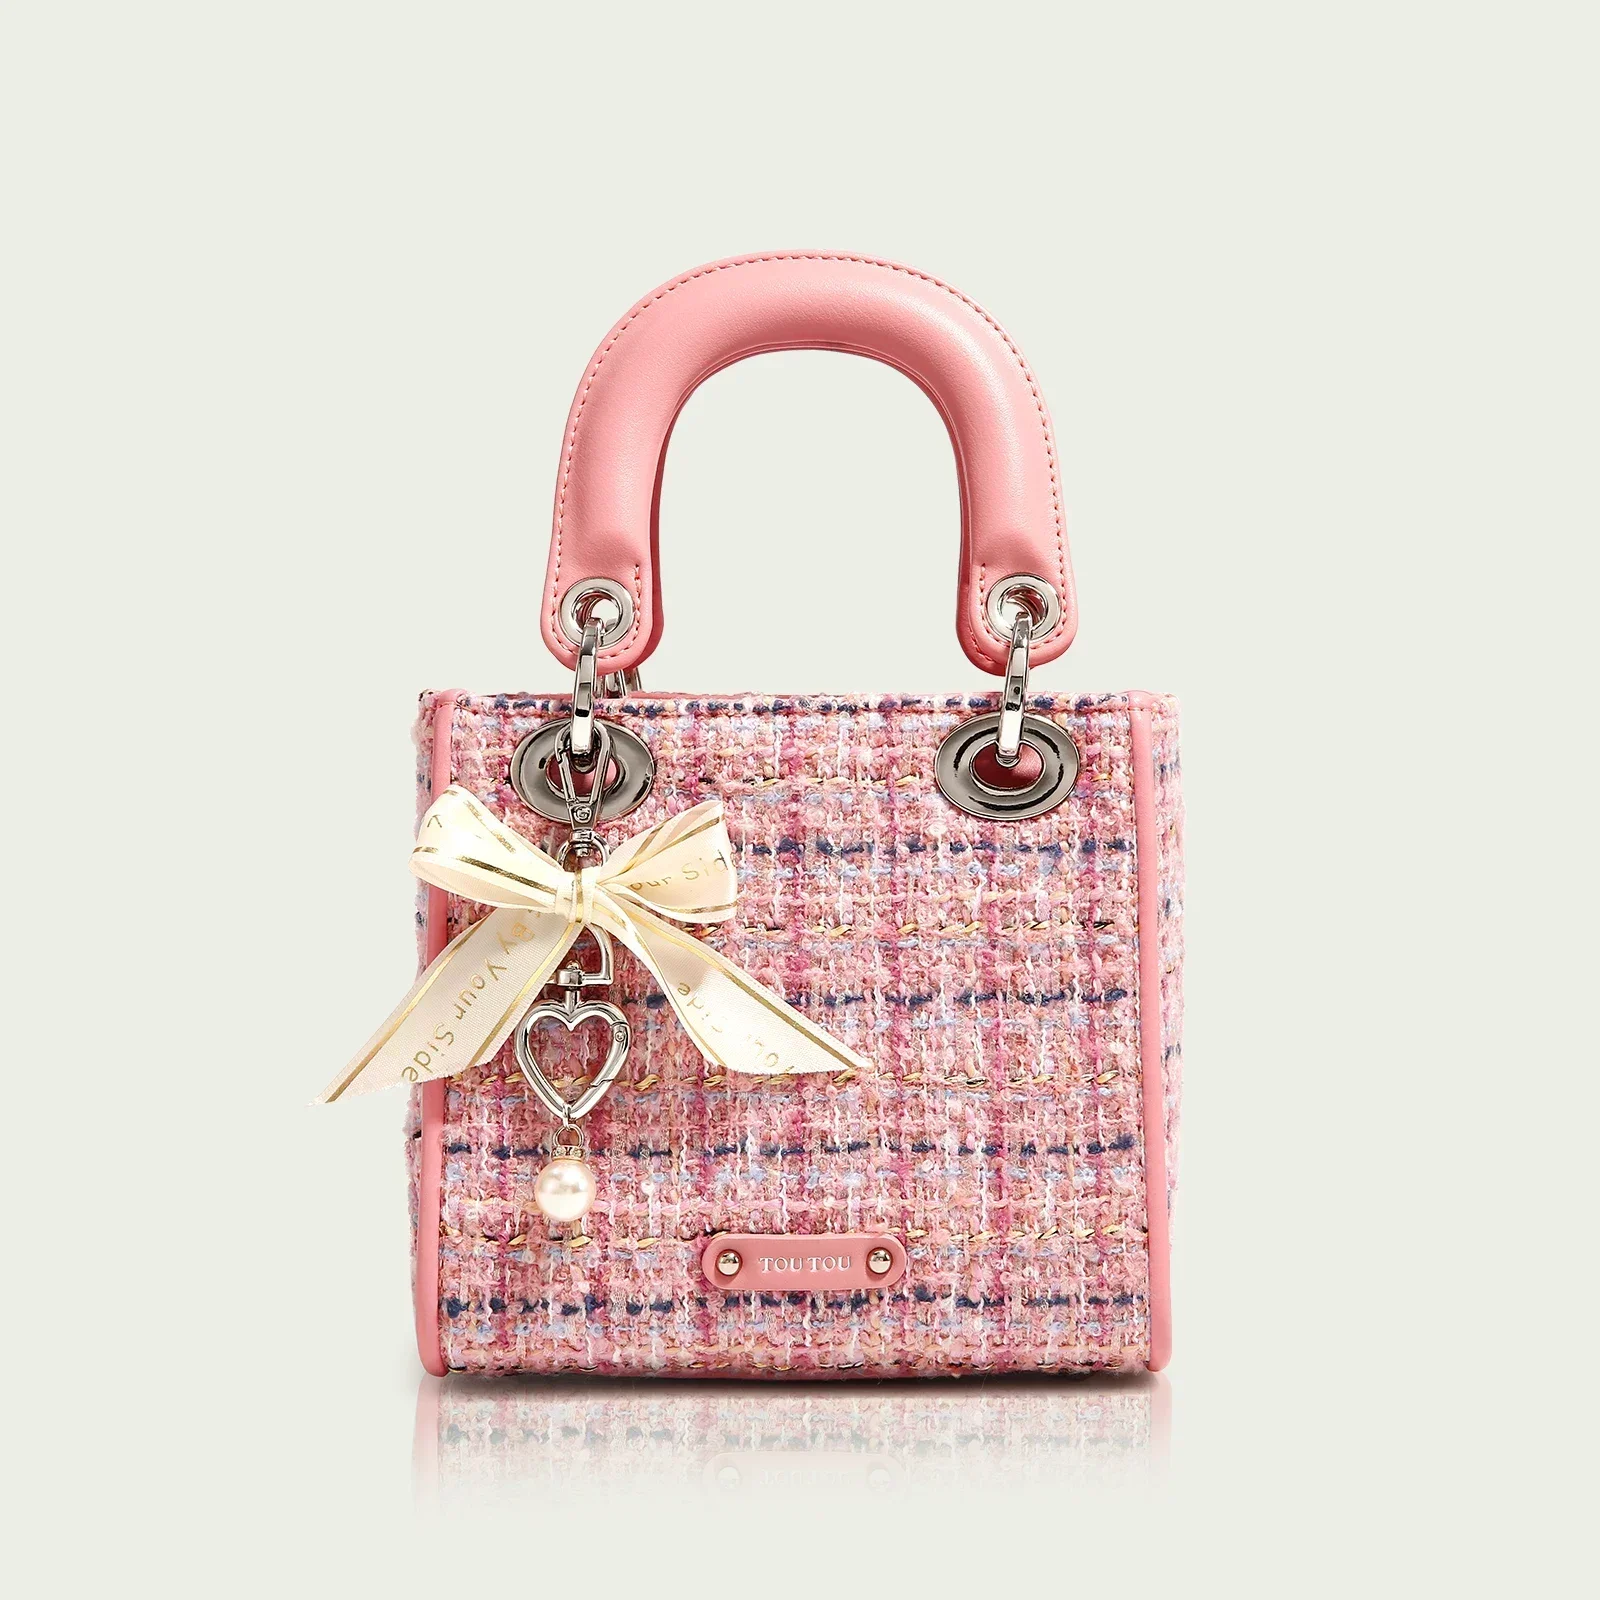 TOUTOU Exquisite and Cute Handbag Women's Crossbody Bag With Original Luxury Designer Shoulder Bag with Bowknot Pendant